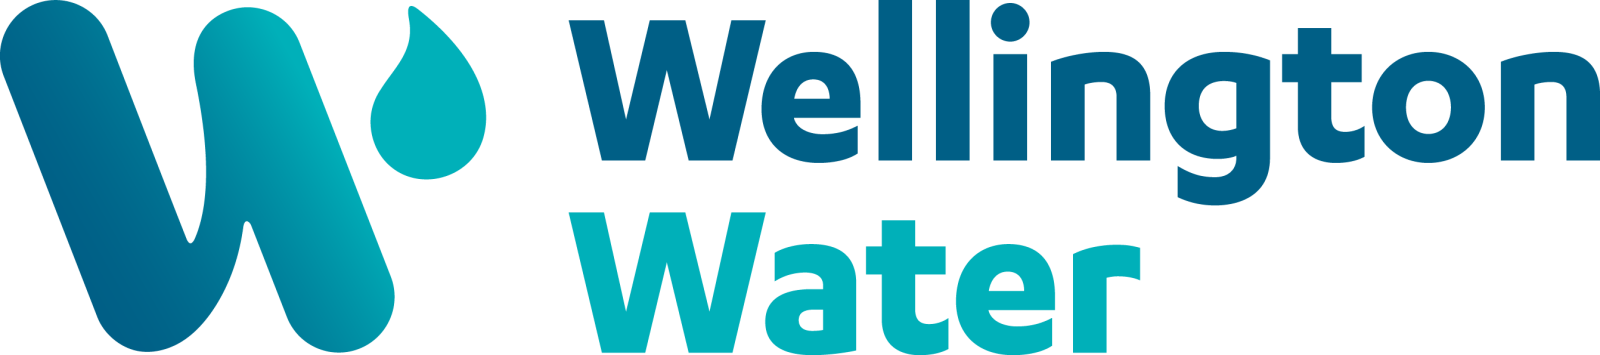 Wellington water logo